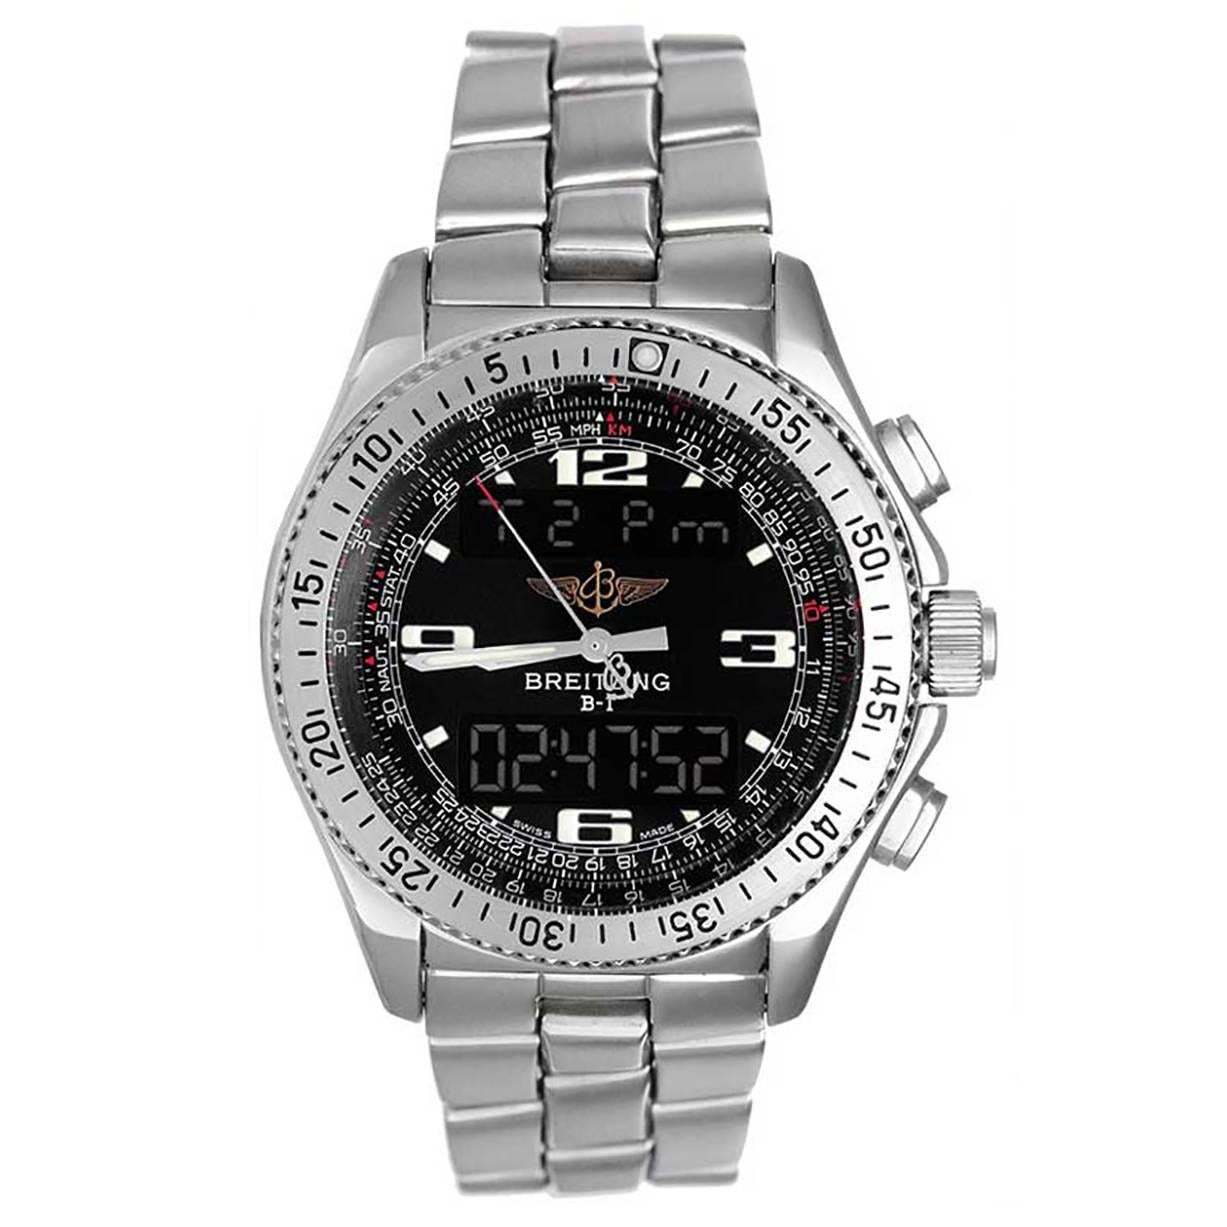 Breitling Stainless Steel Professional B-1 Countdown Timer Quartz Wristwatch